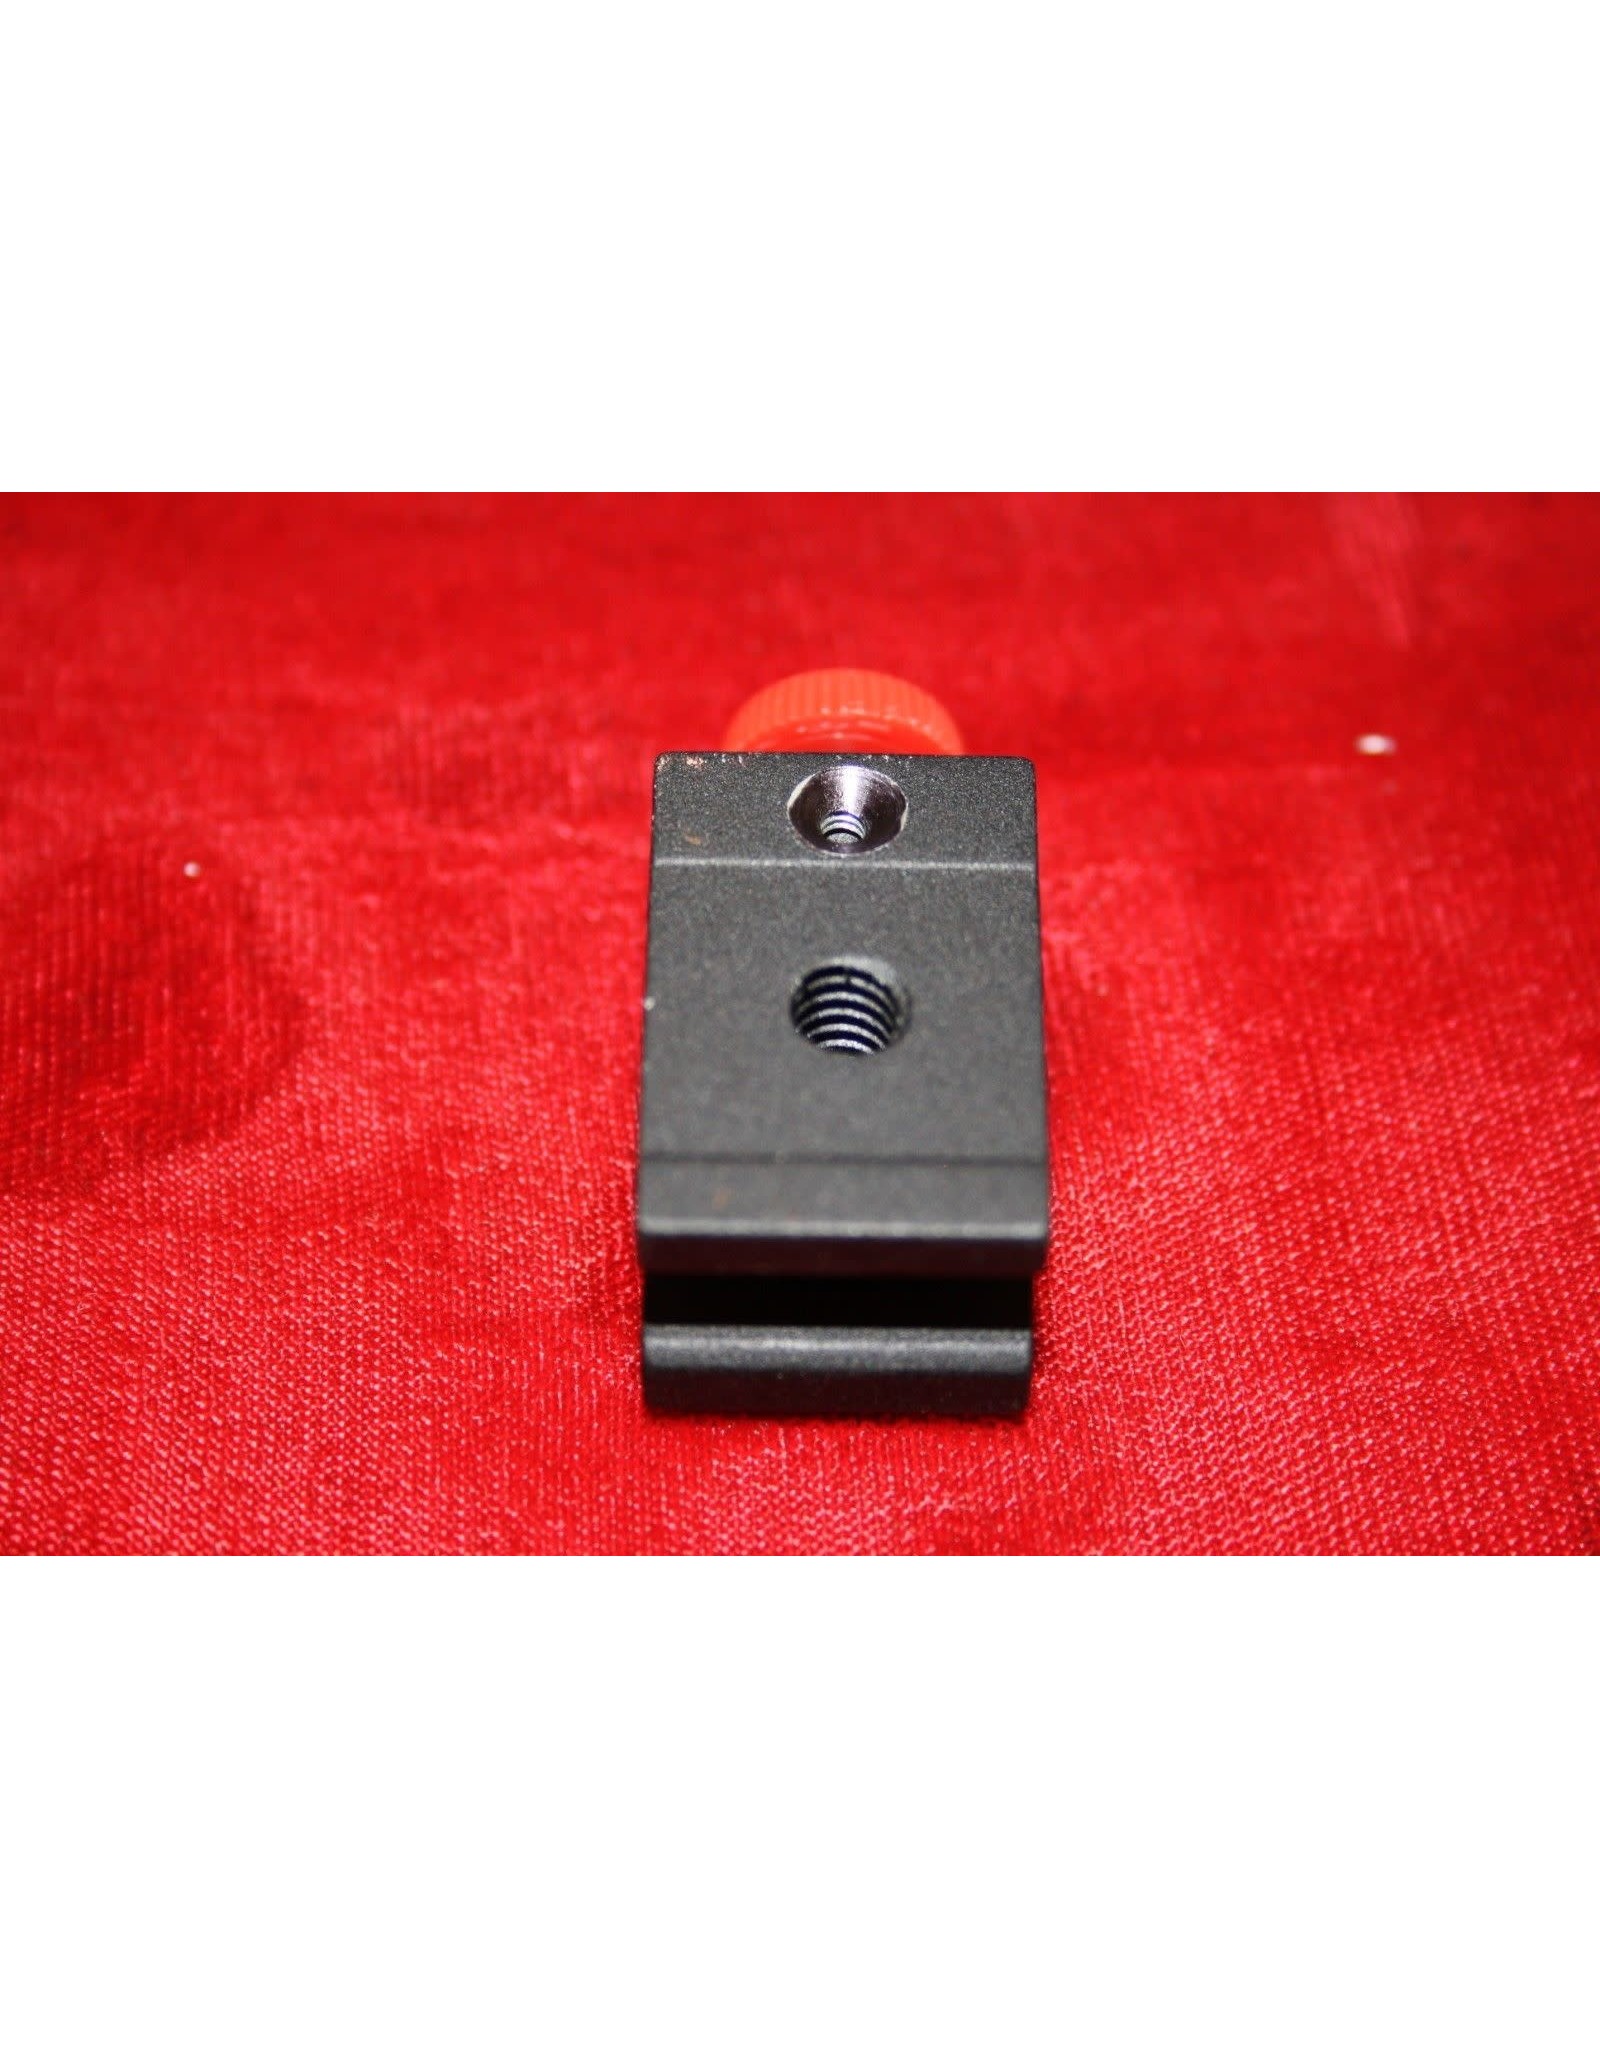 Stroboframe Shoe-Type flash mount for VH, RL, system 2000 Brackets (Pre-owned)